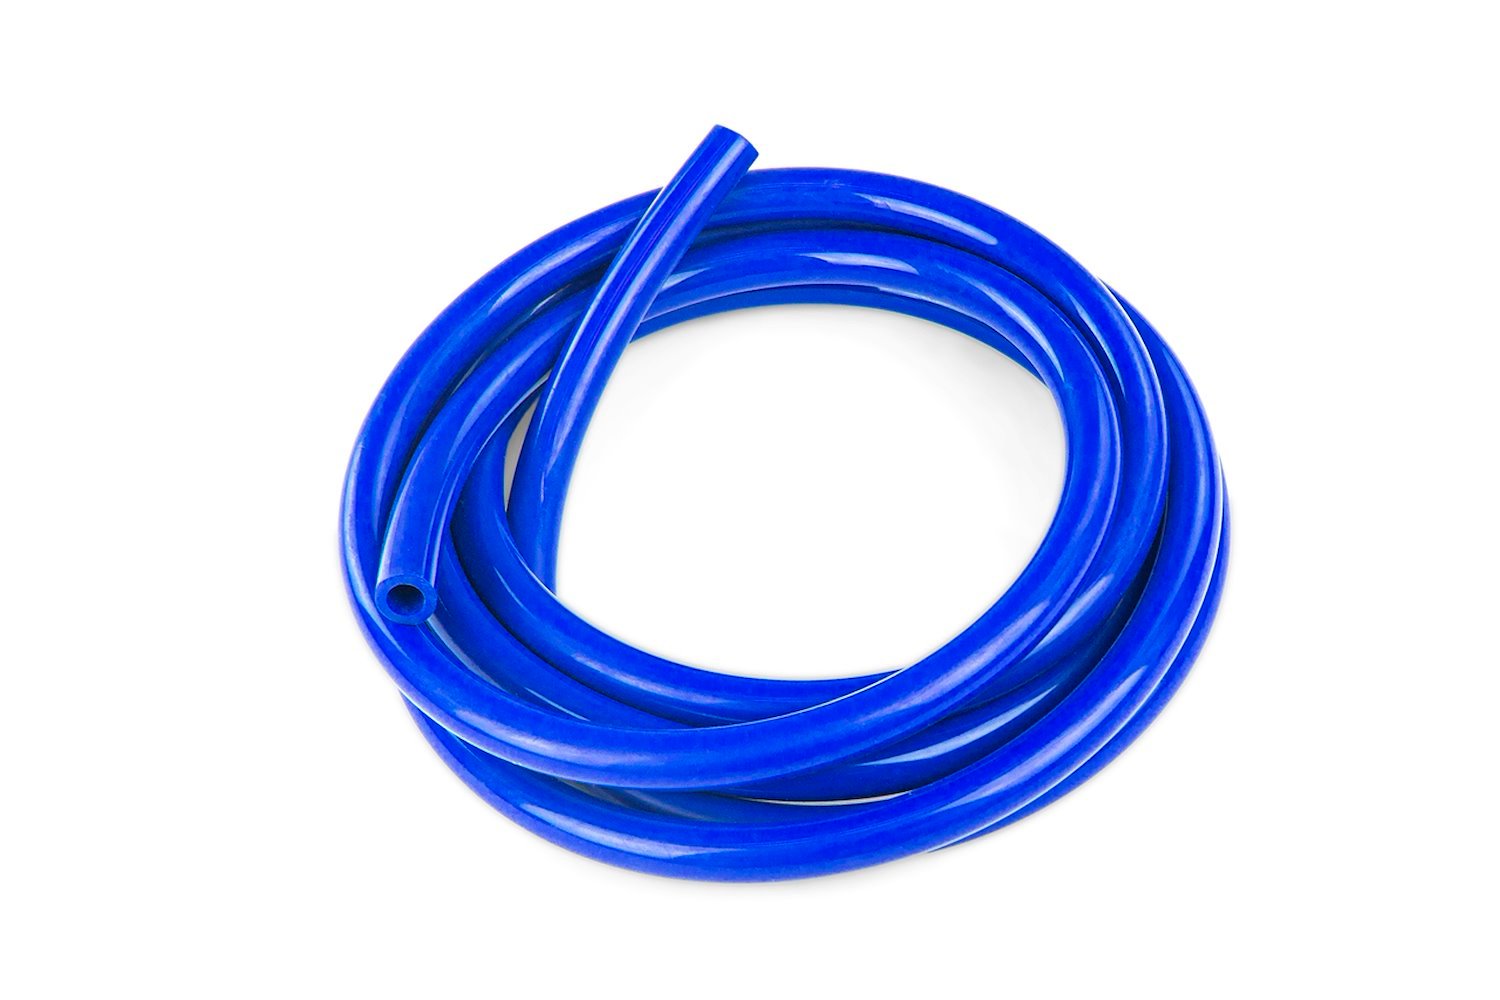 HTSVH35-BLUEx10 High-Temperature Silicone Vacuum Hose Tubing, 3.5 mm ID, 10 ft. Roll, Blue